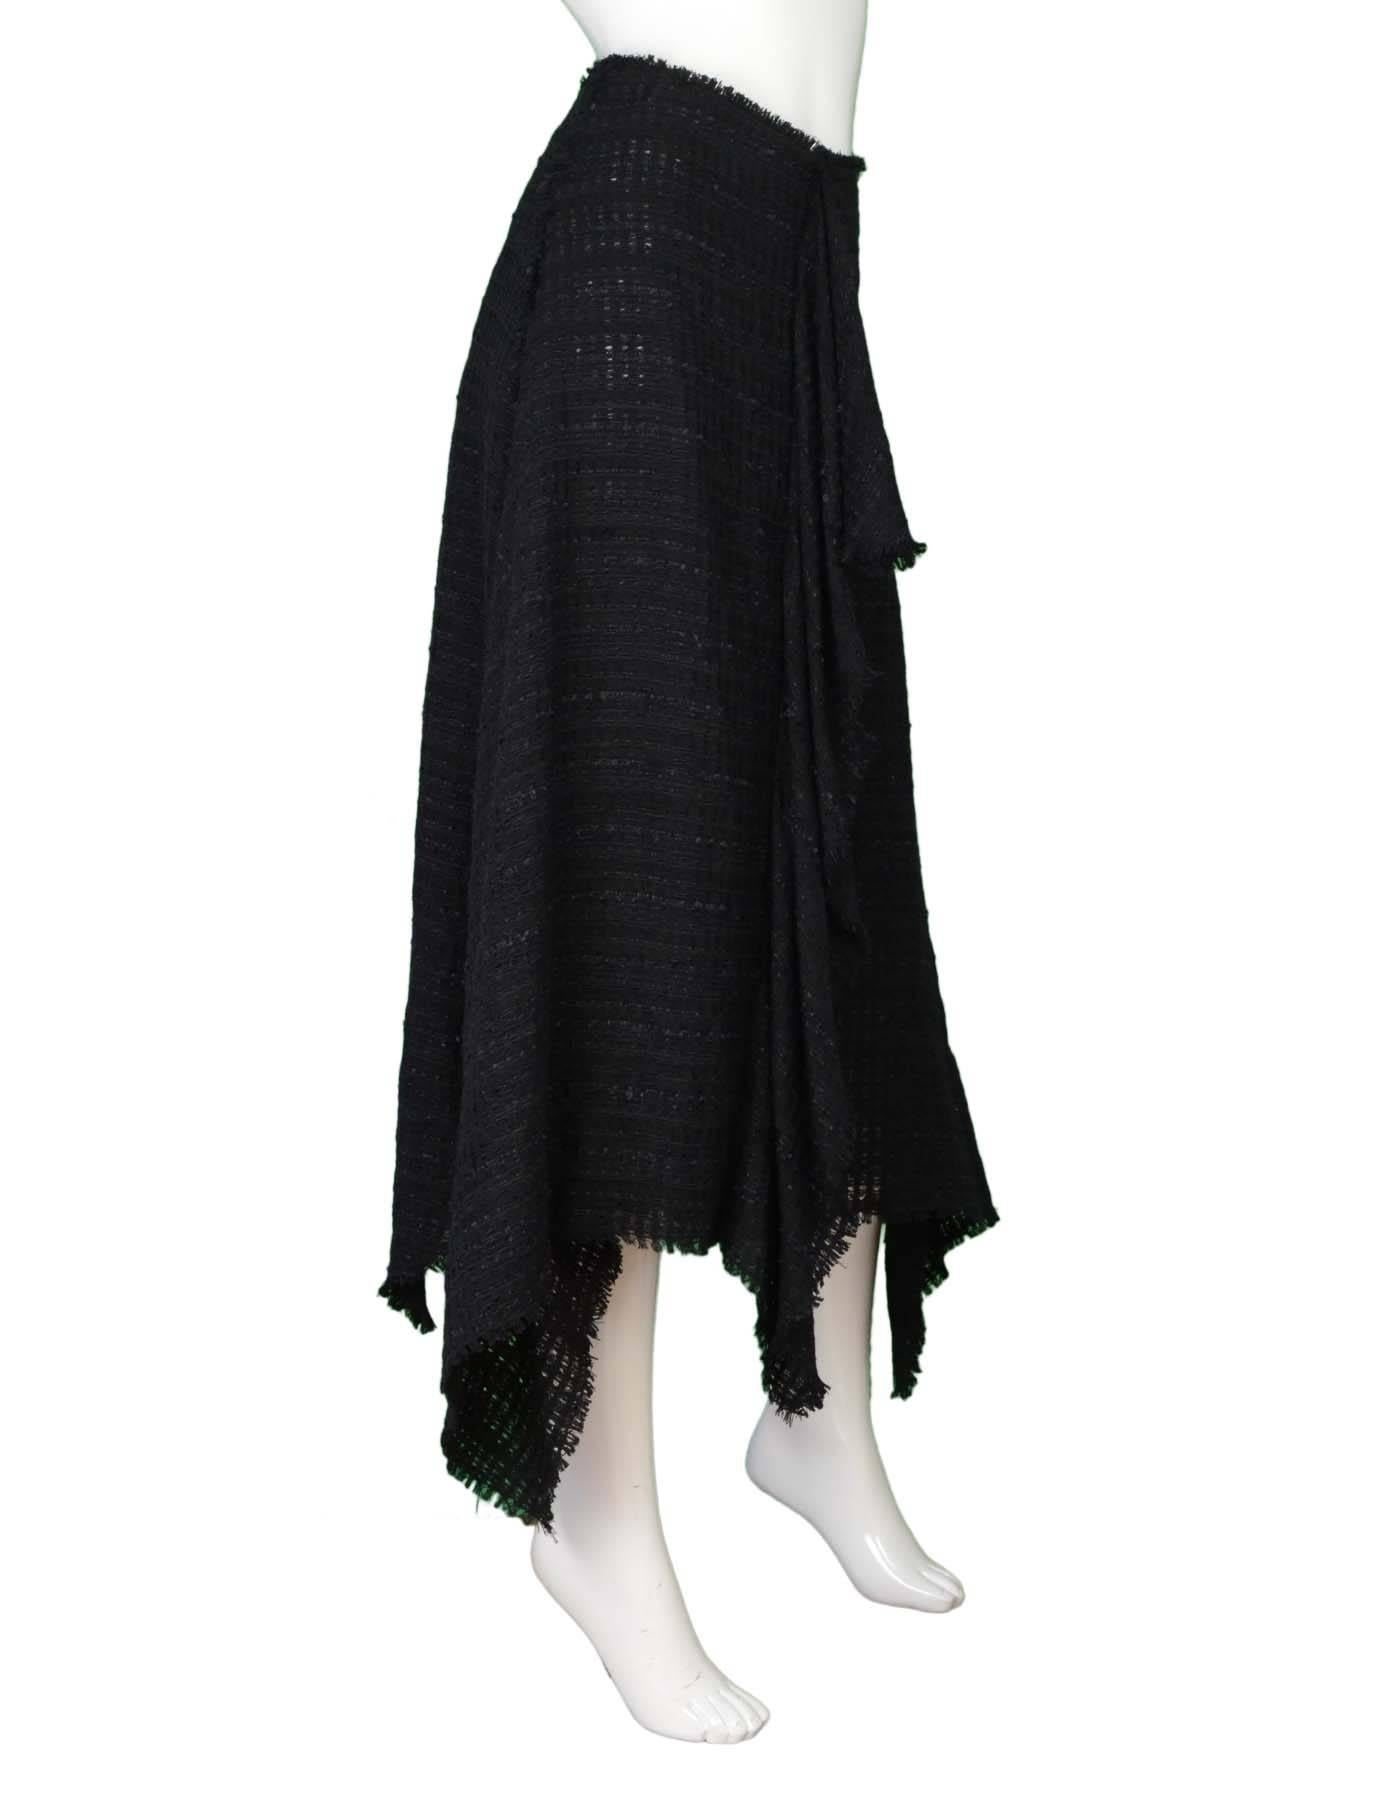 Proenza Schouler Black Tweed Handkerchief Hem Skirt sz 4
Features ruffles down the center, and a midi length handkerchief hem

Made In: China
Color: Black
Composition: 52% Acrylic, 22%nylon, 14% cotton, 12% viscose
Lining: Black 100%